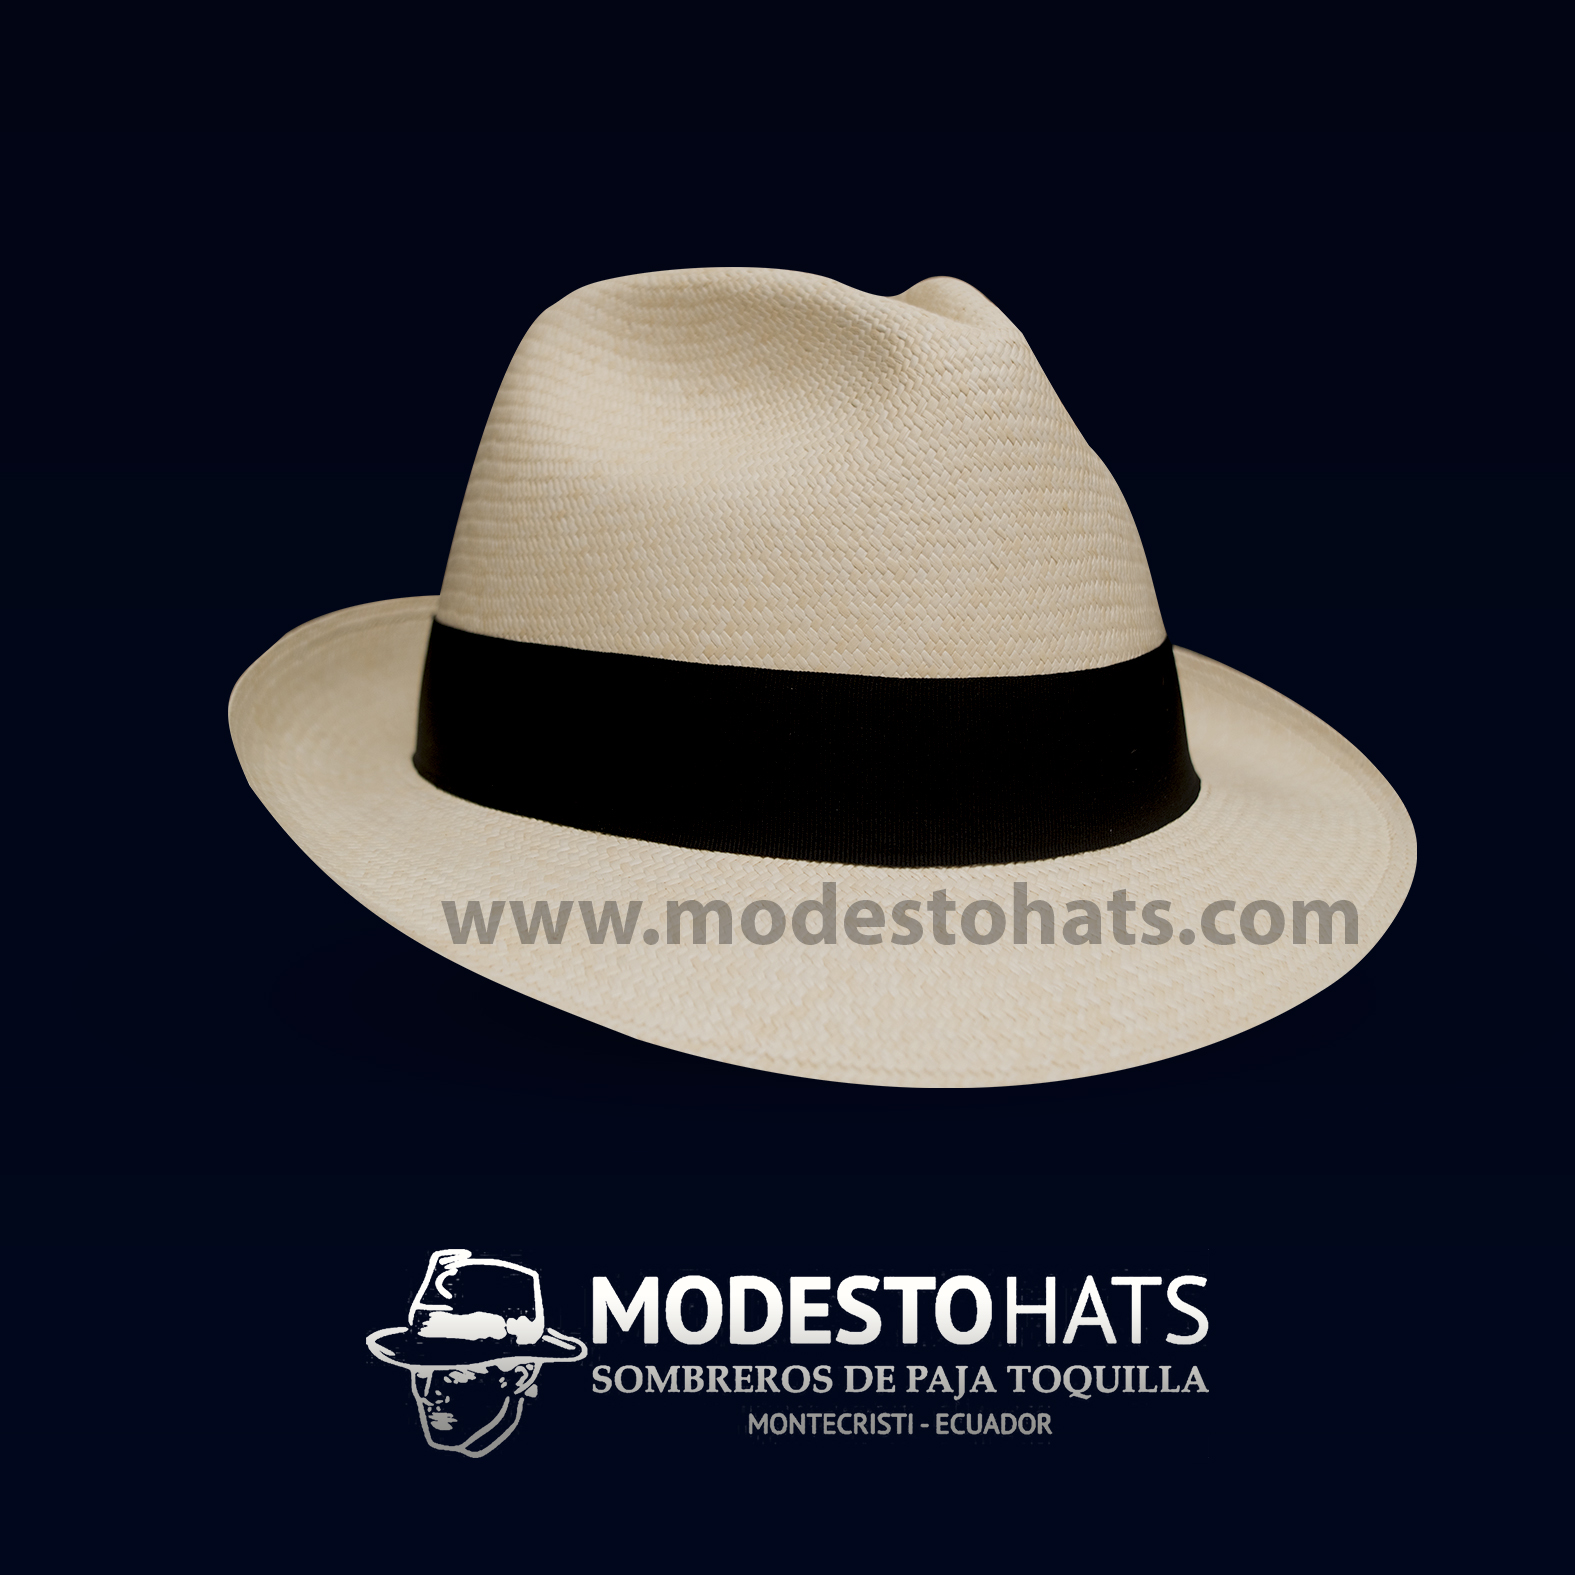 Montecristi hat short brim - Modesto Hats